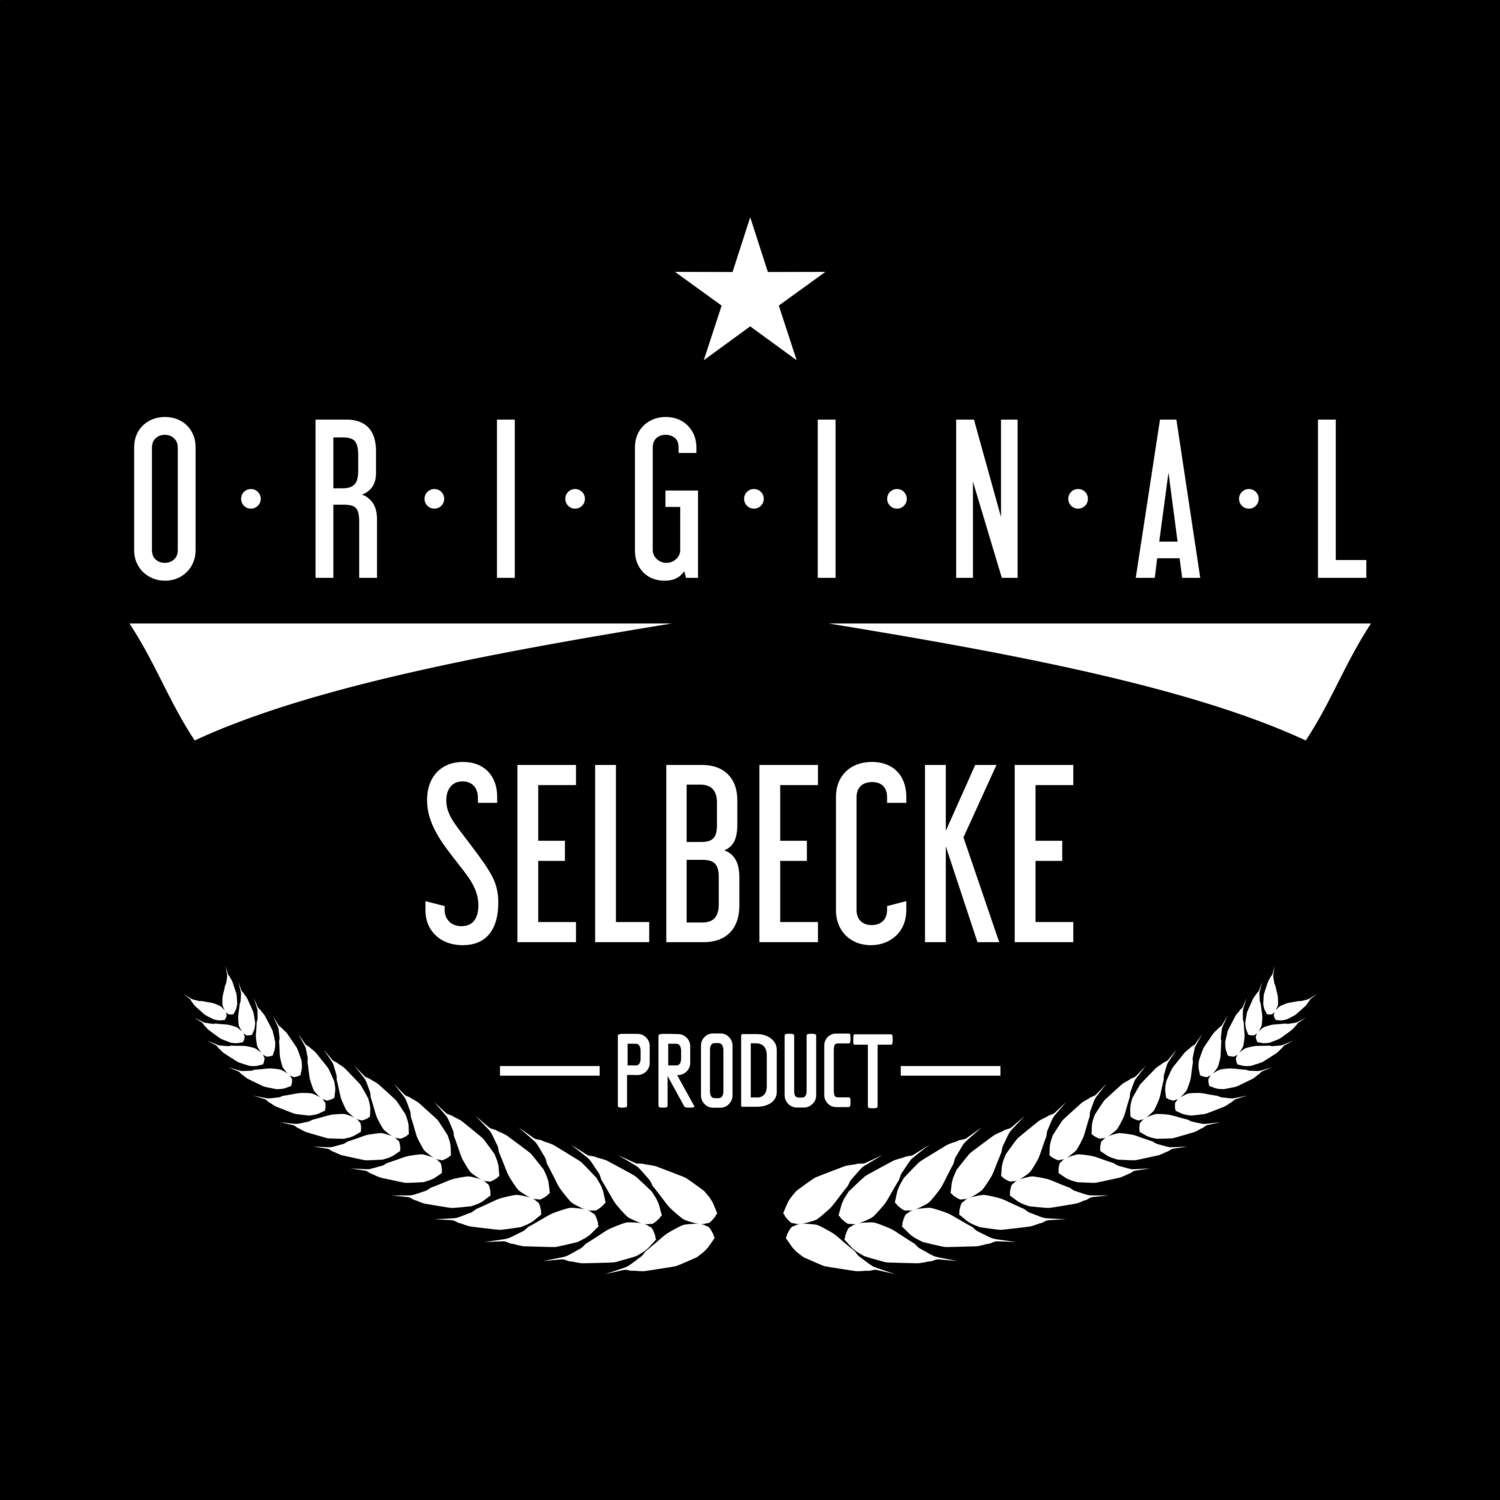 Selbecke T-Shirt »Original Product«